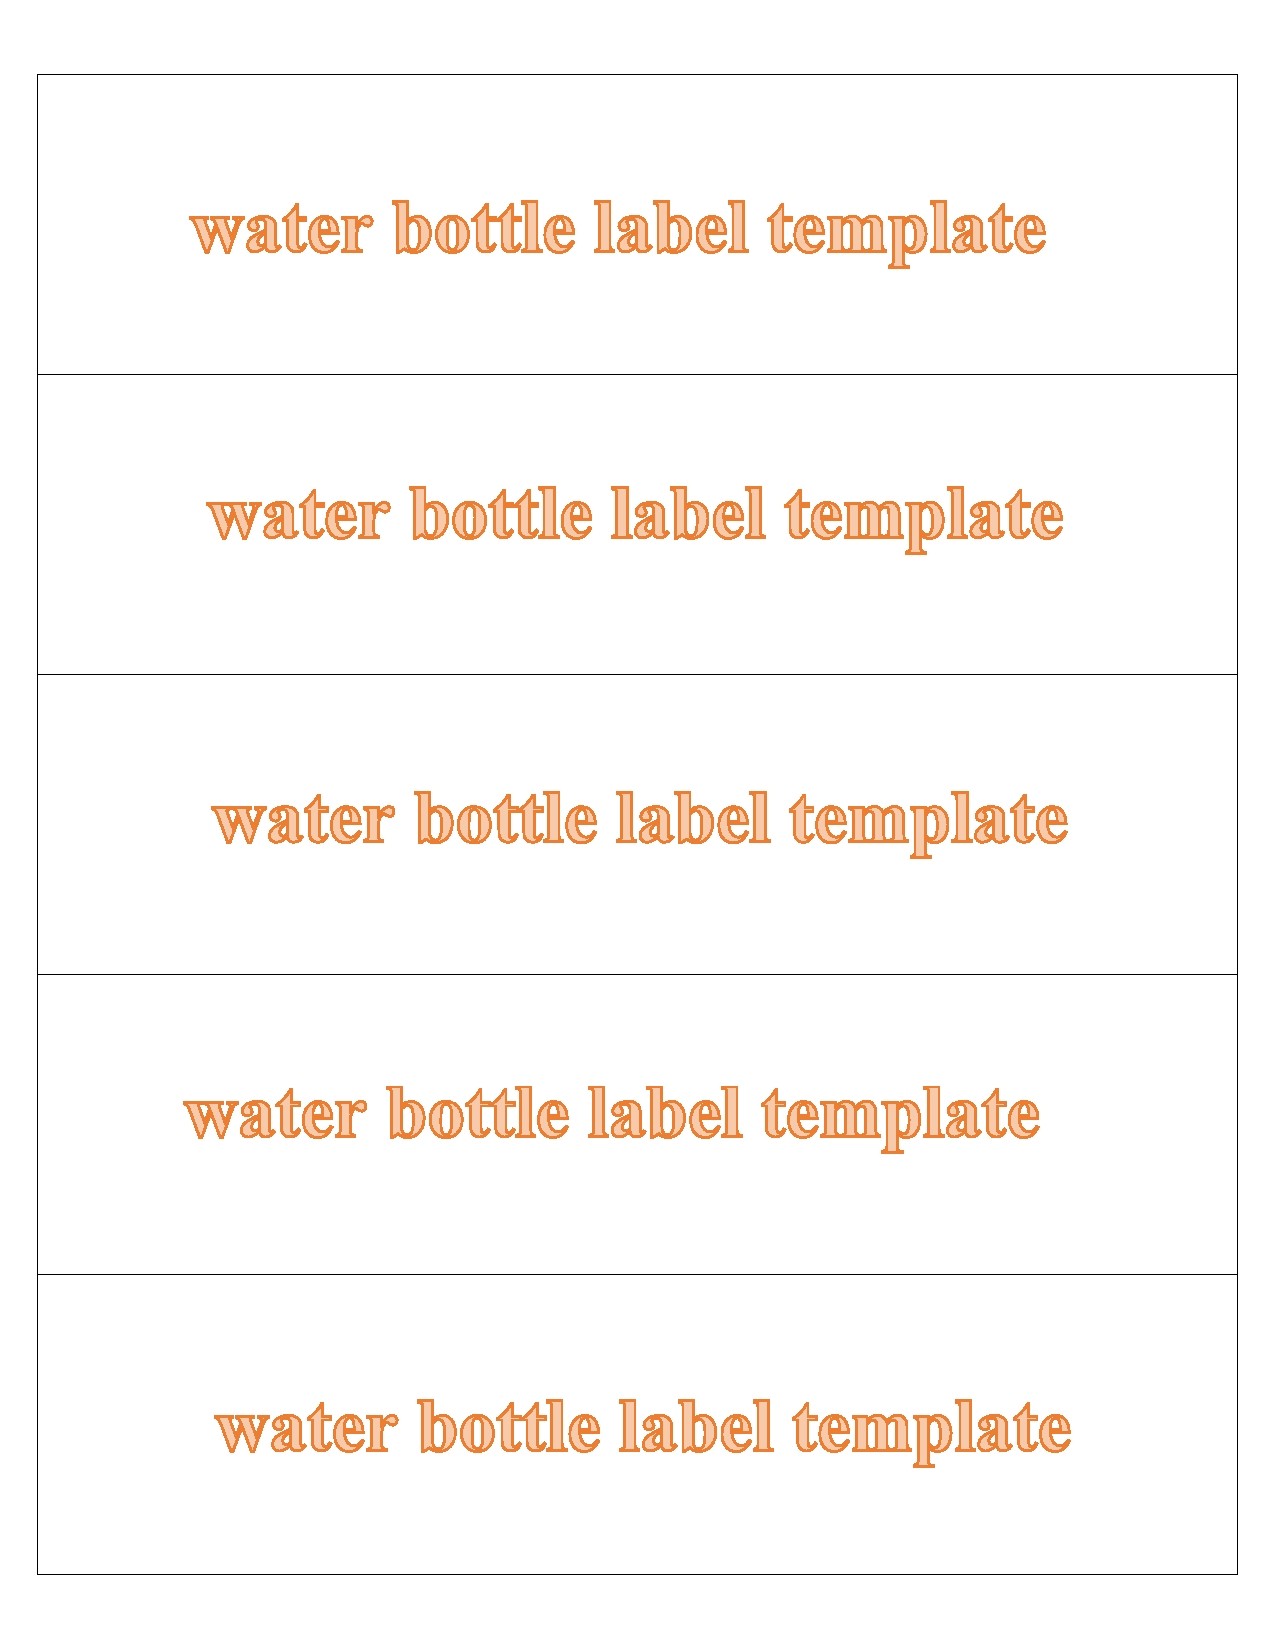 Free water bottle label template 19